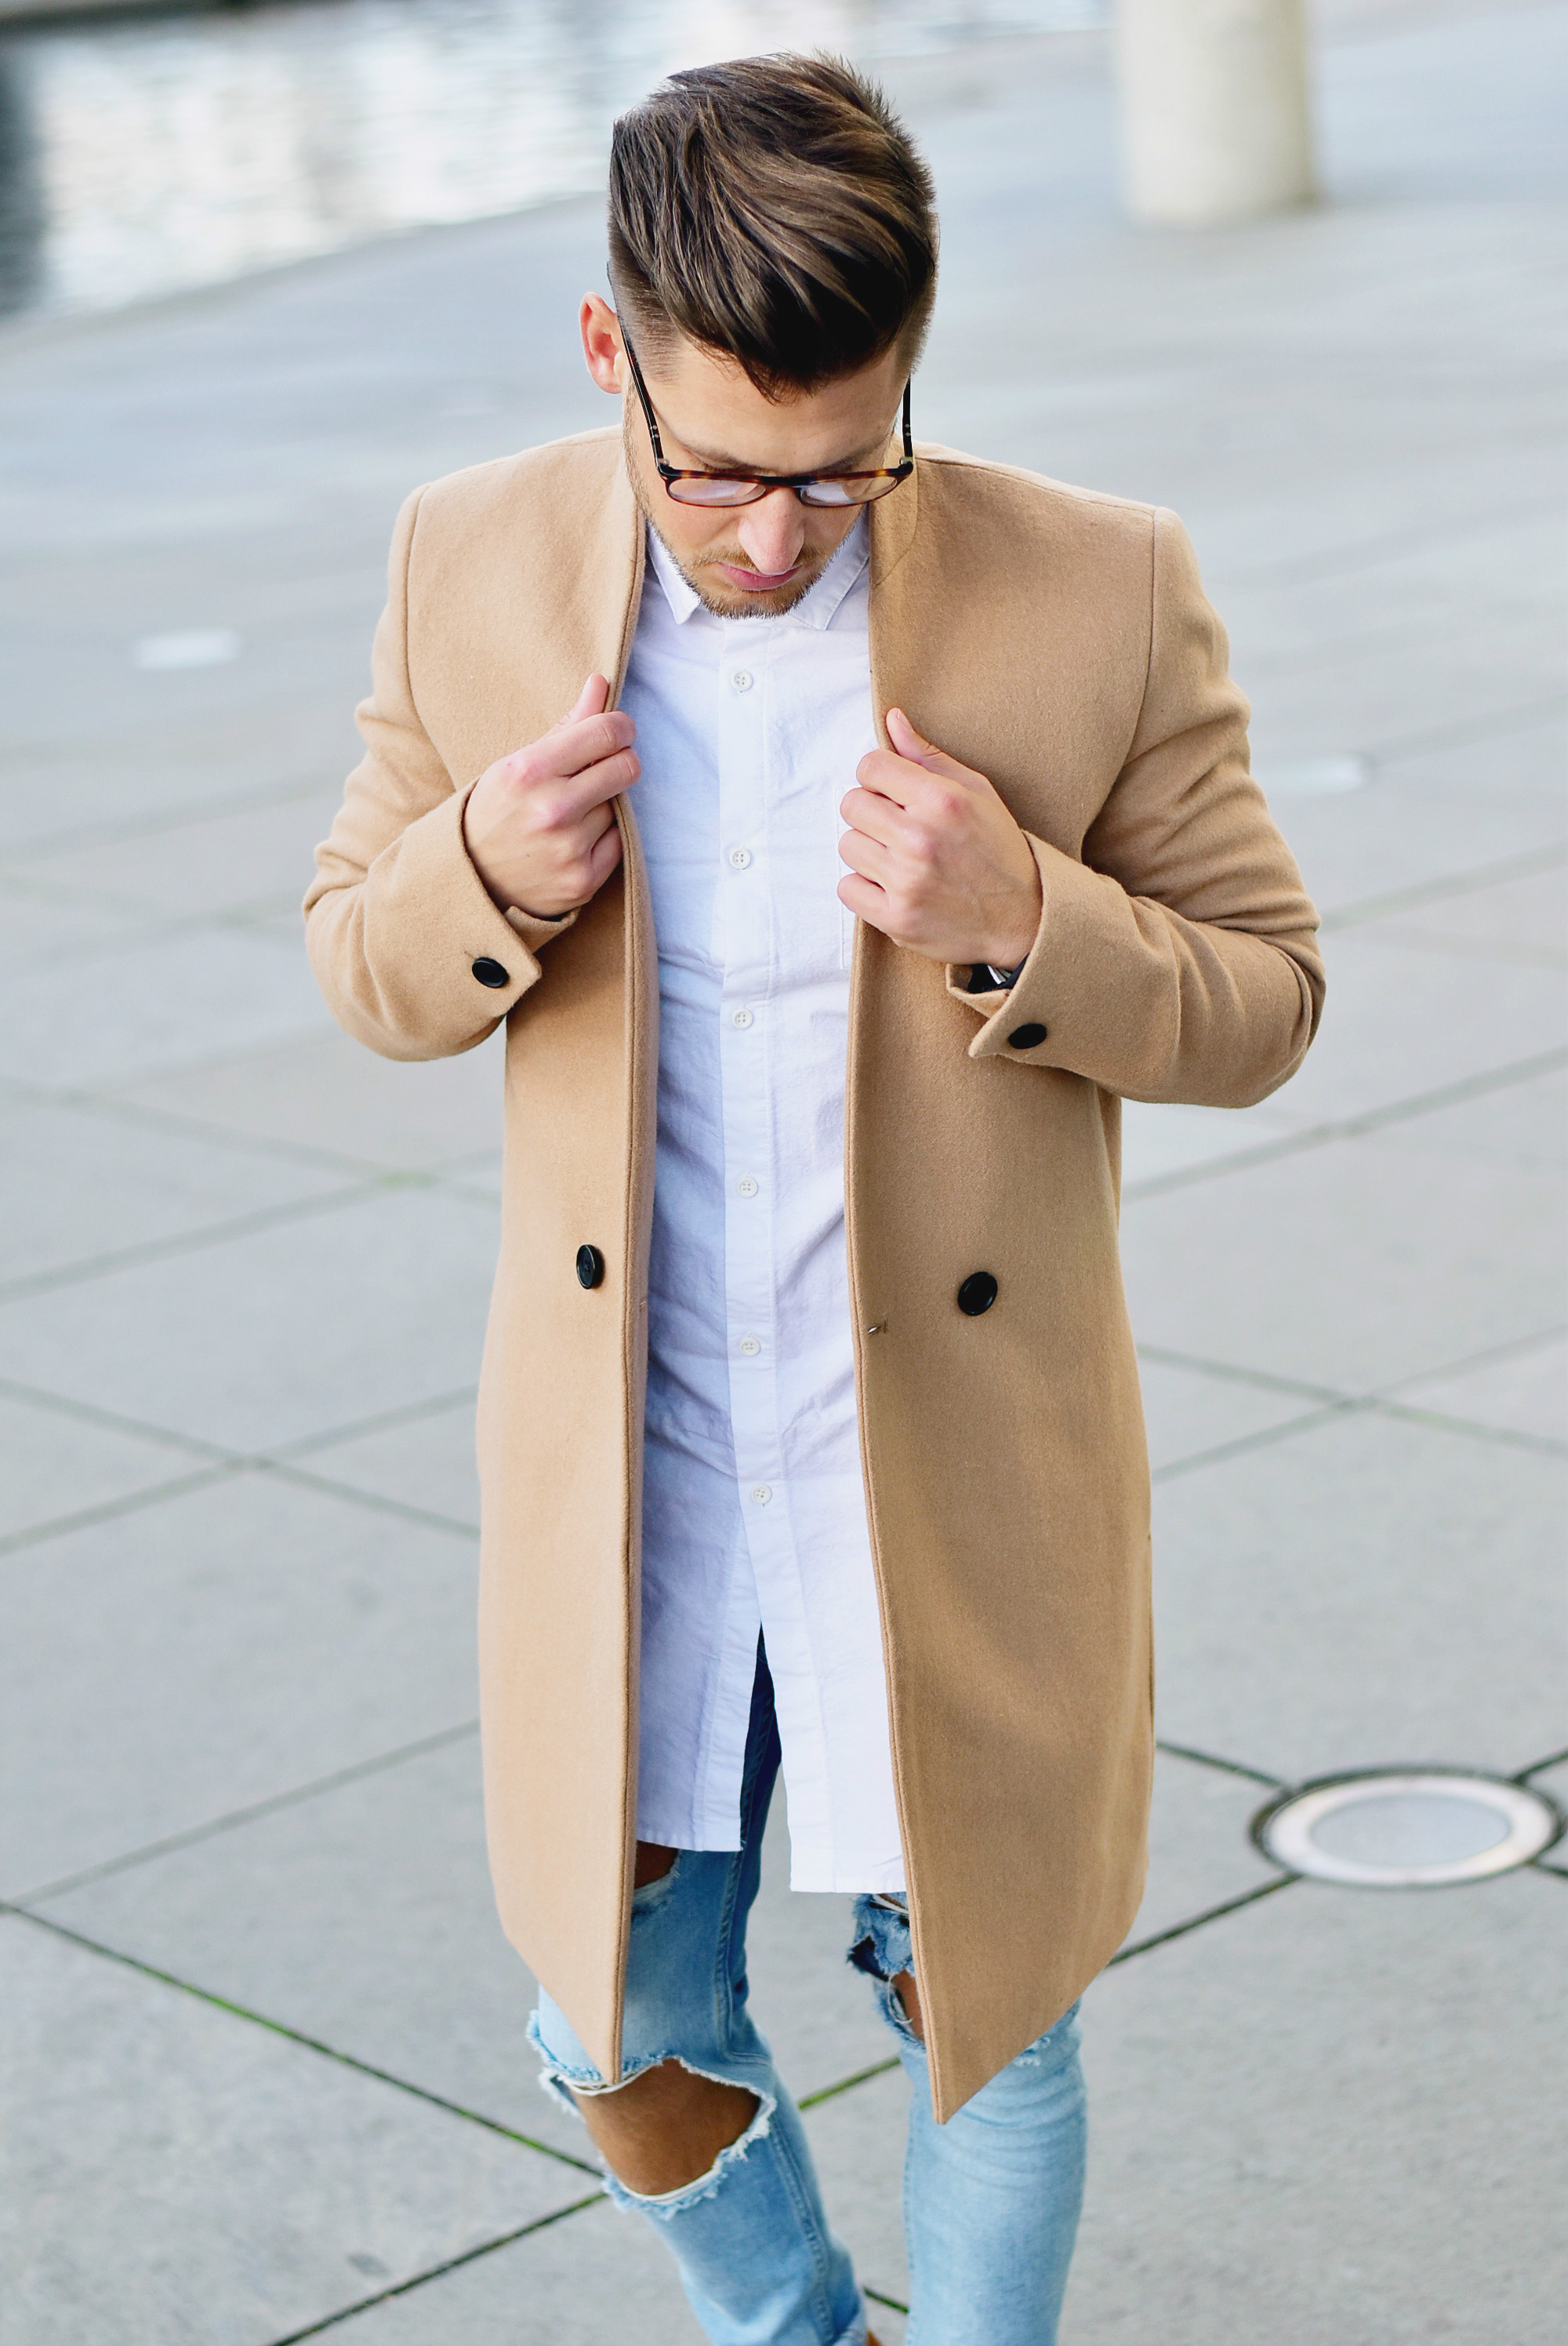 Tommeezjerry-Styleblog-Männerblog-Modeblog-Berlin-Asos-Mantel-Camel-Coat-Outfit-Männermode-Streetwear